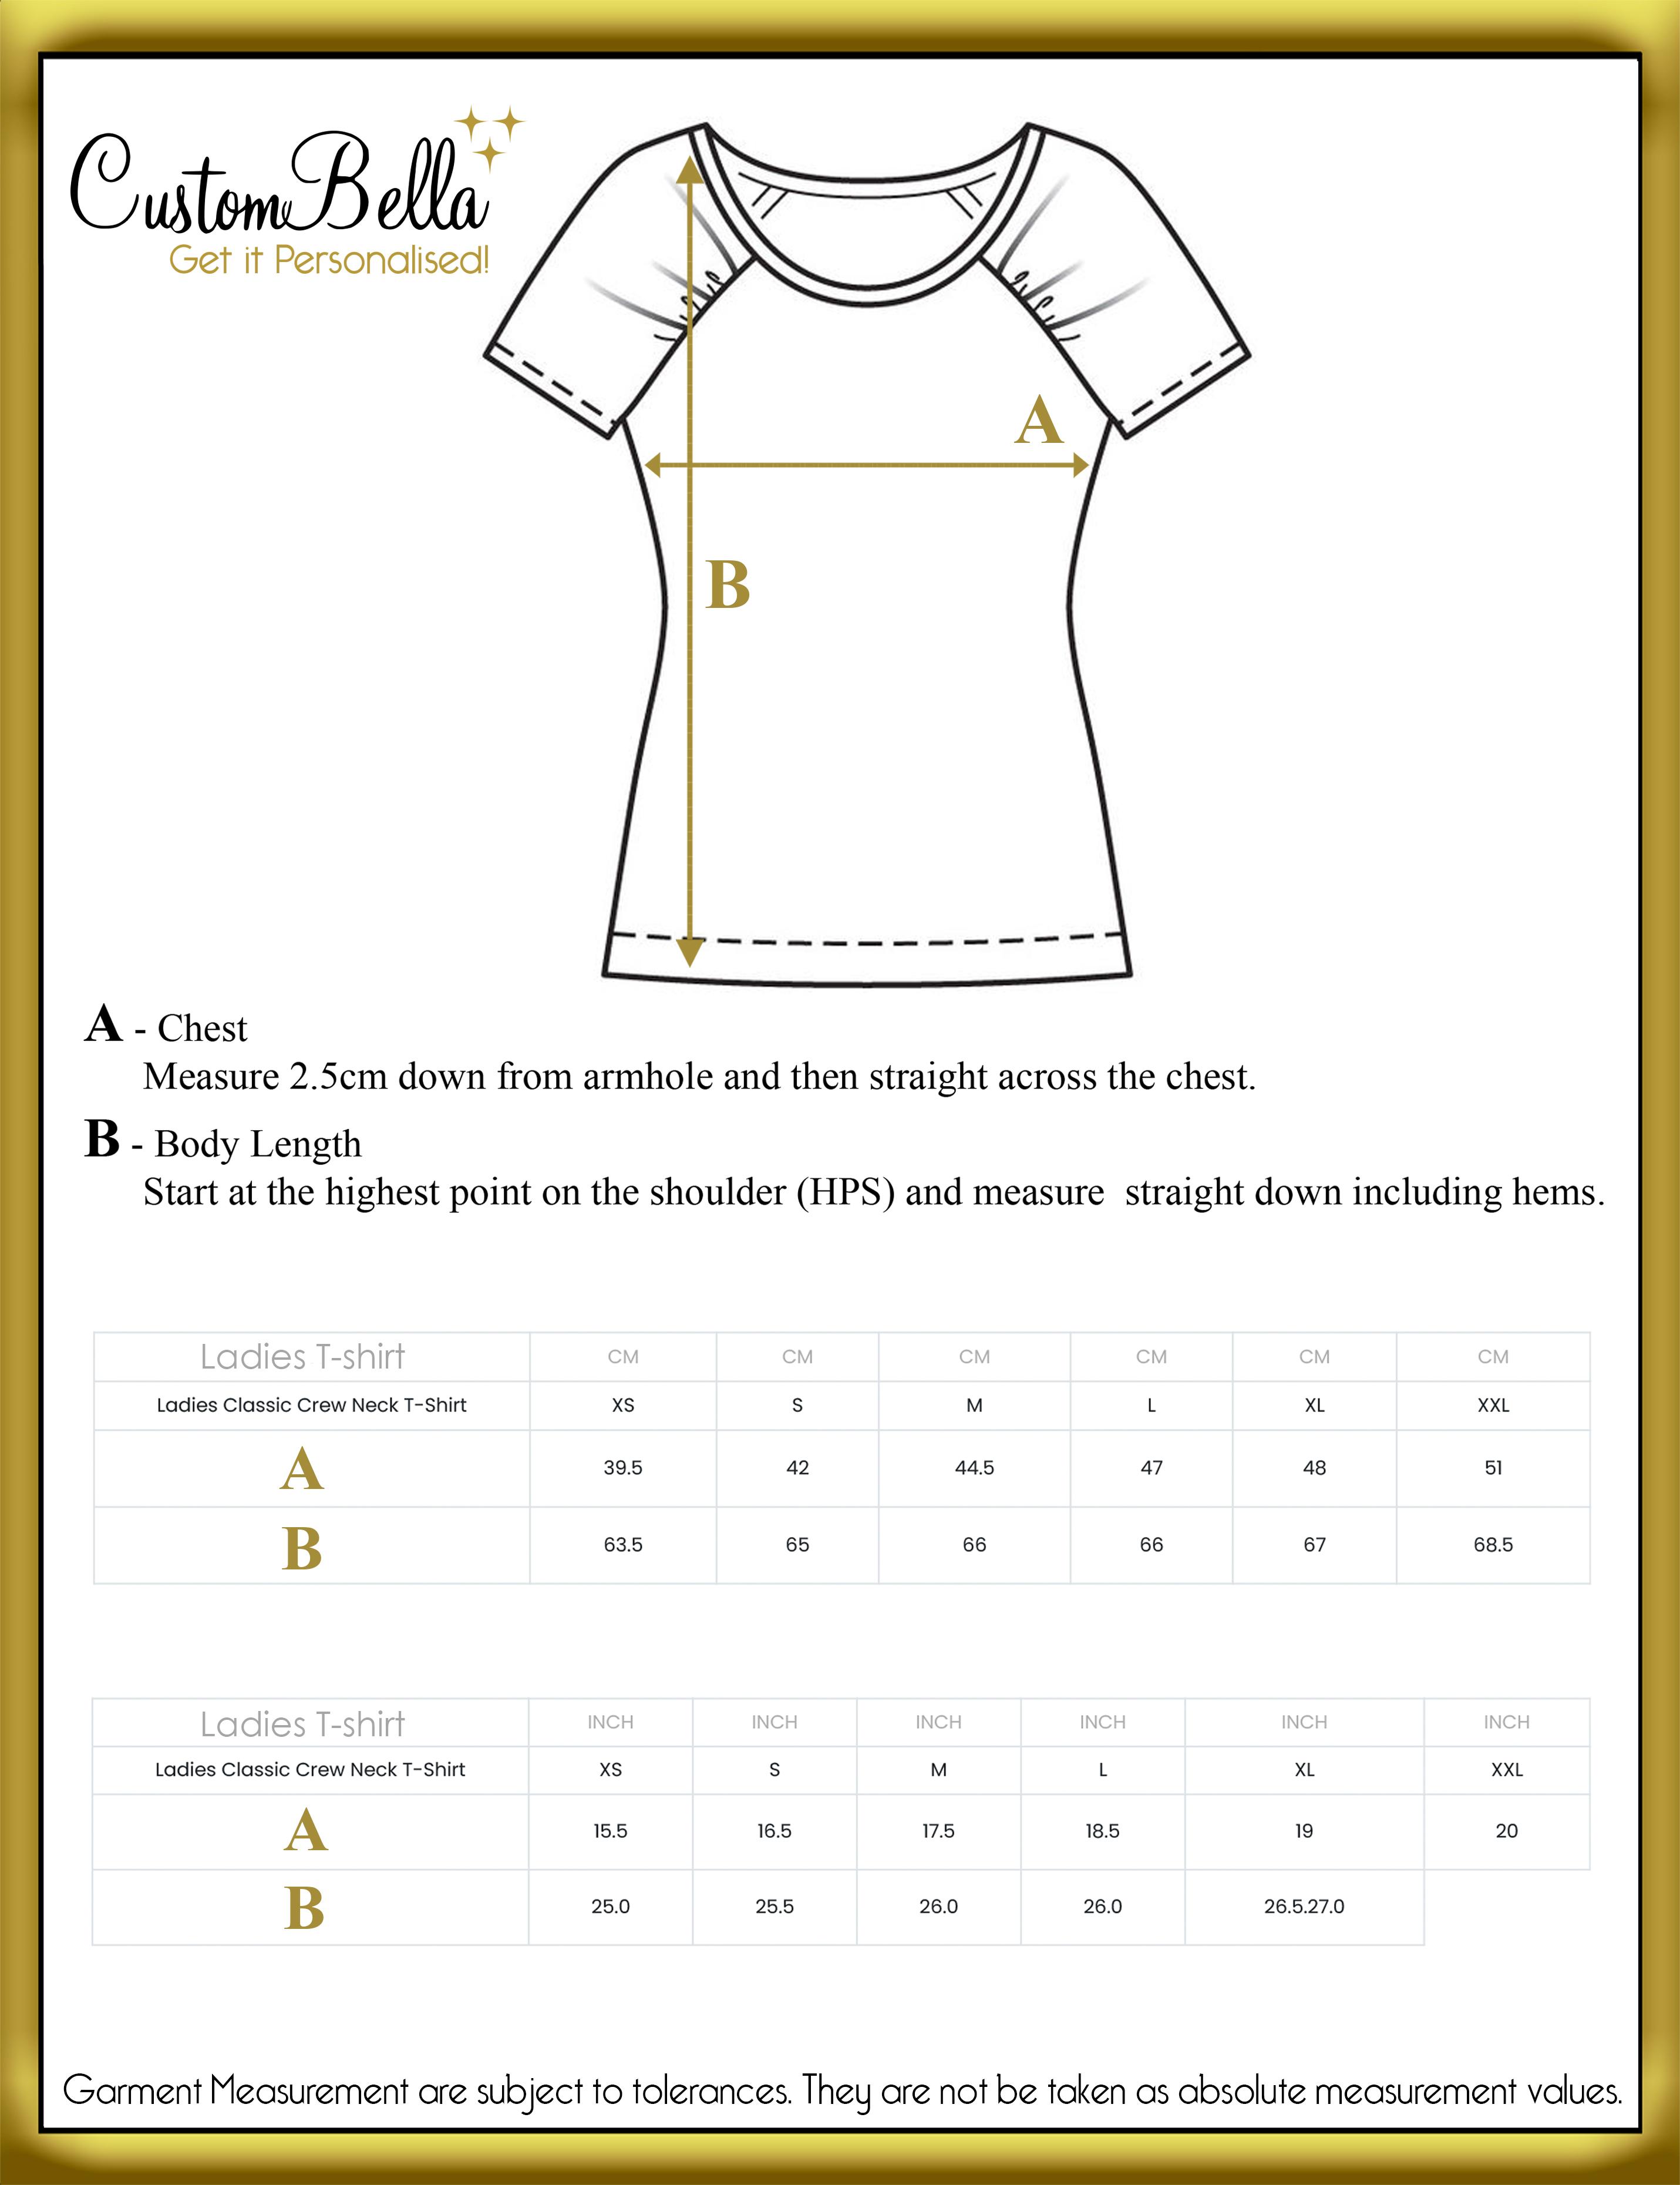 Full Colour Printed Women's T-shirt size chart